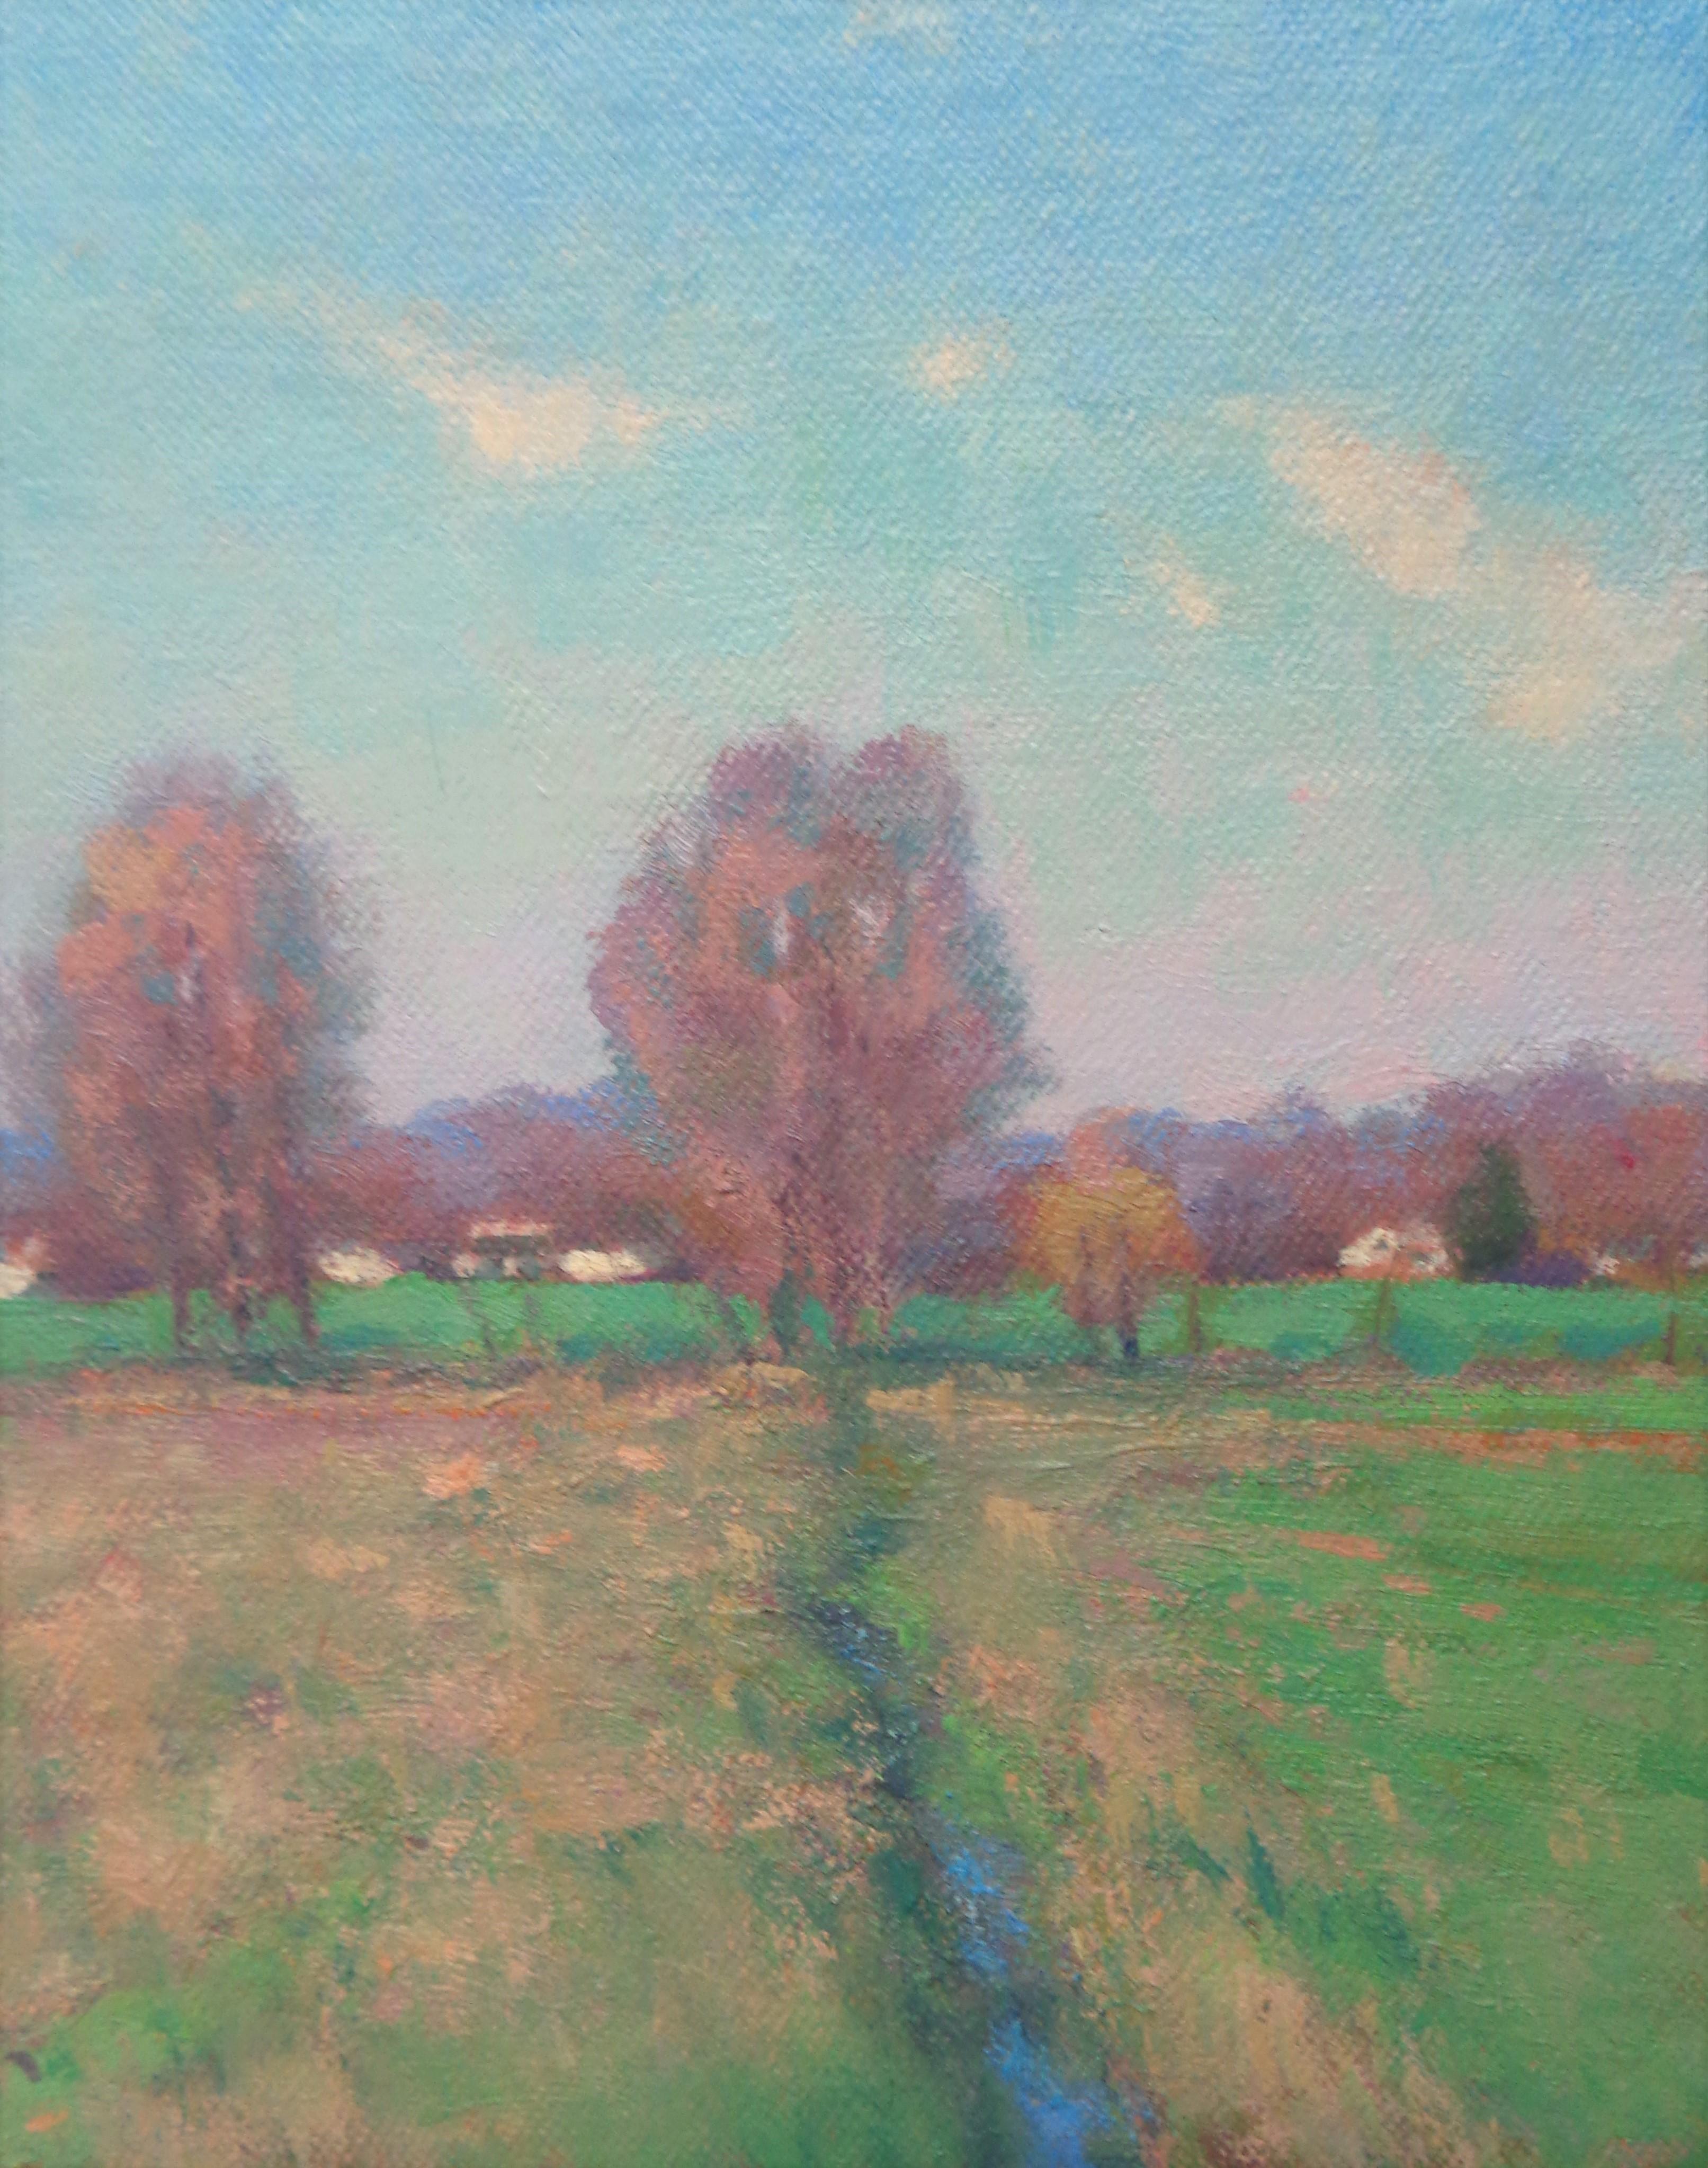  Impressionistic Rural Farm Landscape Oil Painting Michael Budden Springtime 3